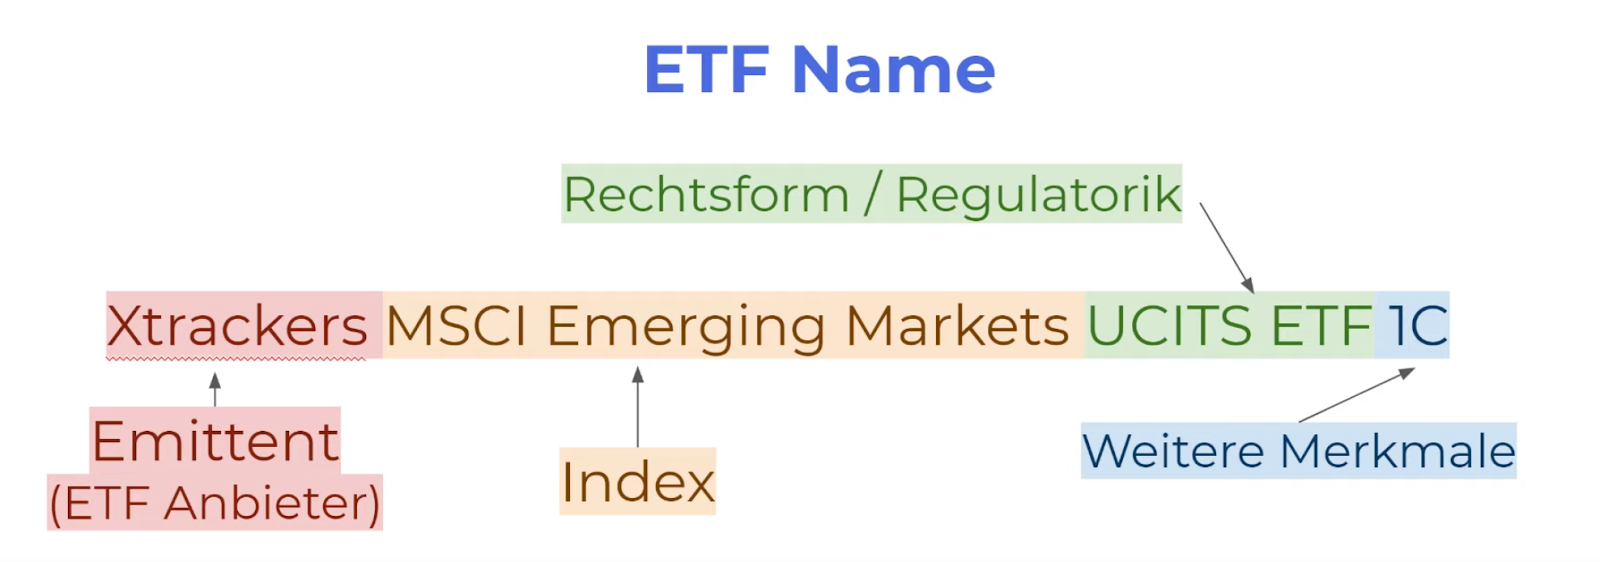 ETF-Name erklärt